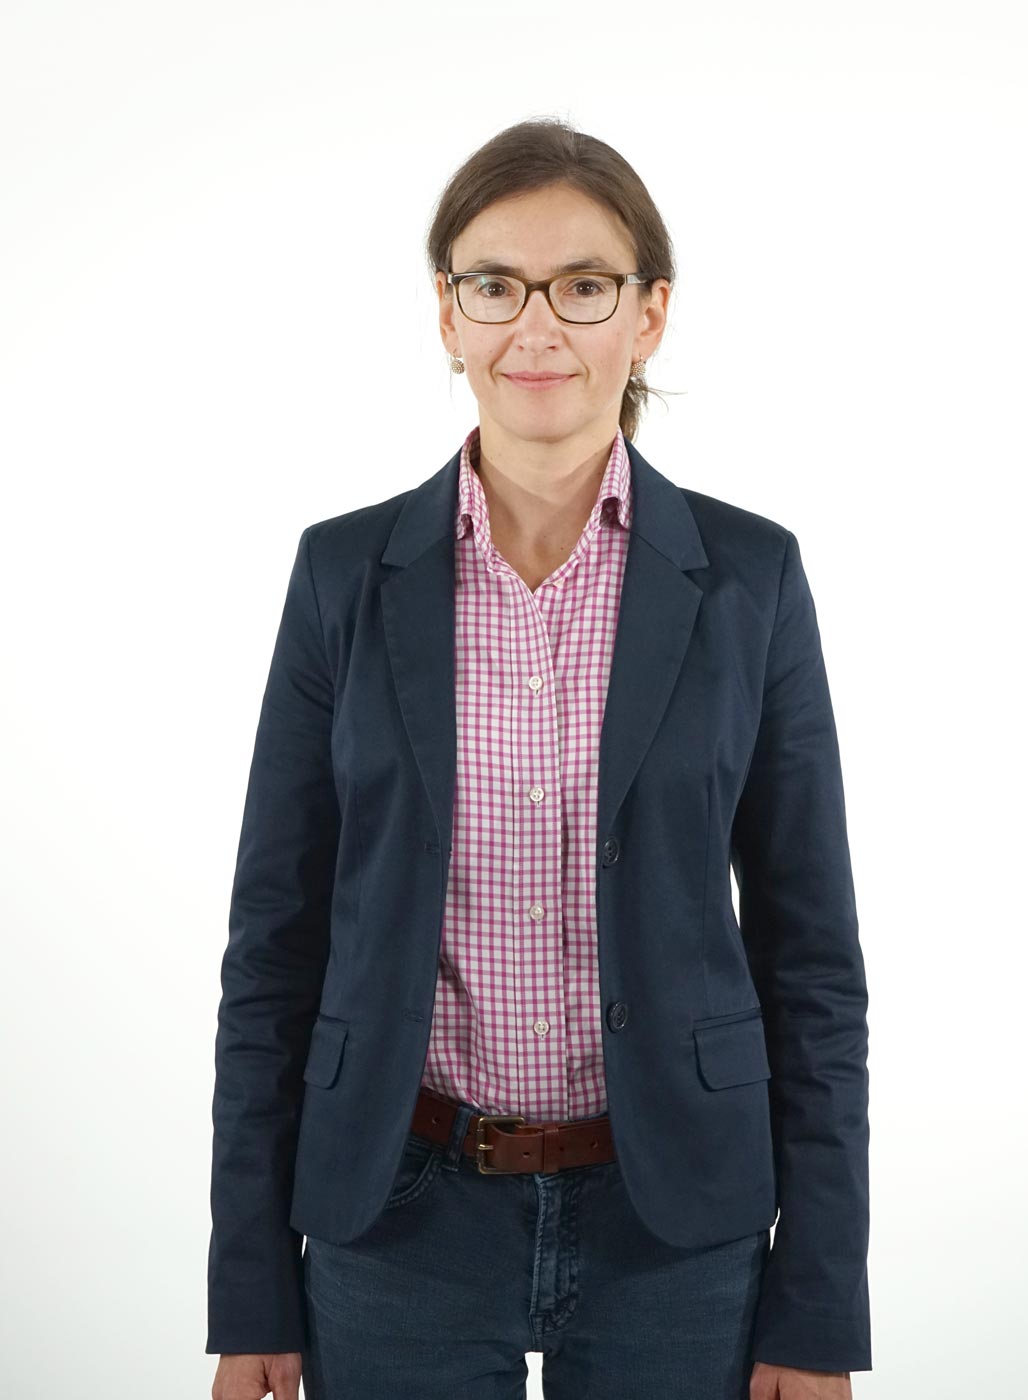 Prof. Dr. iur. Simone von Hardenberg